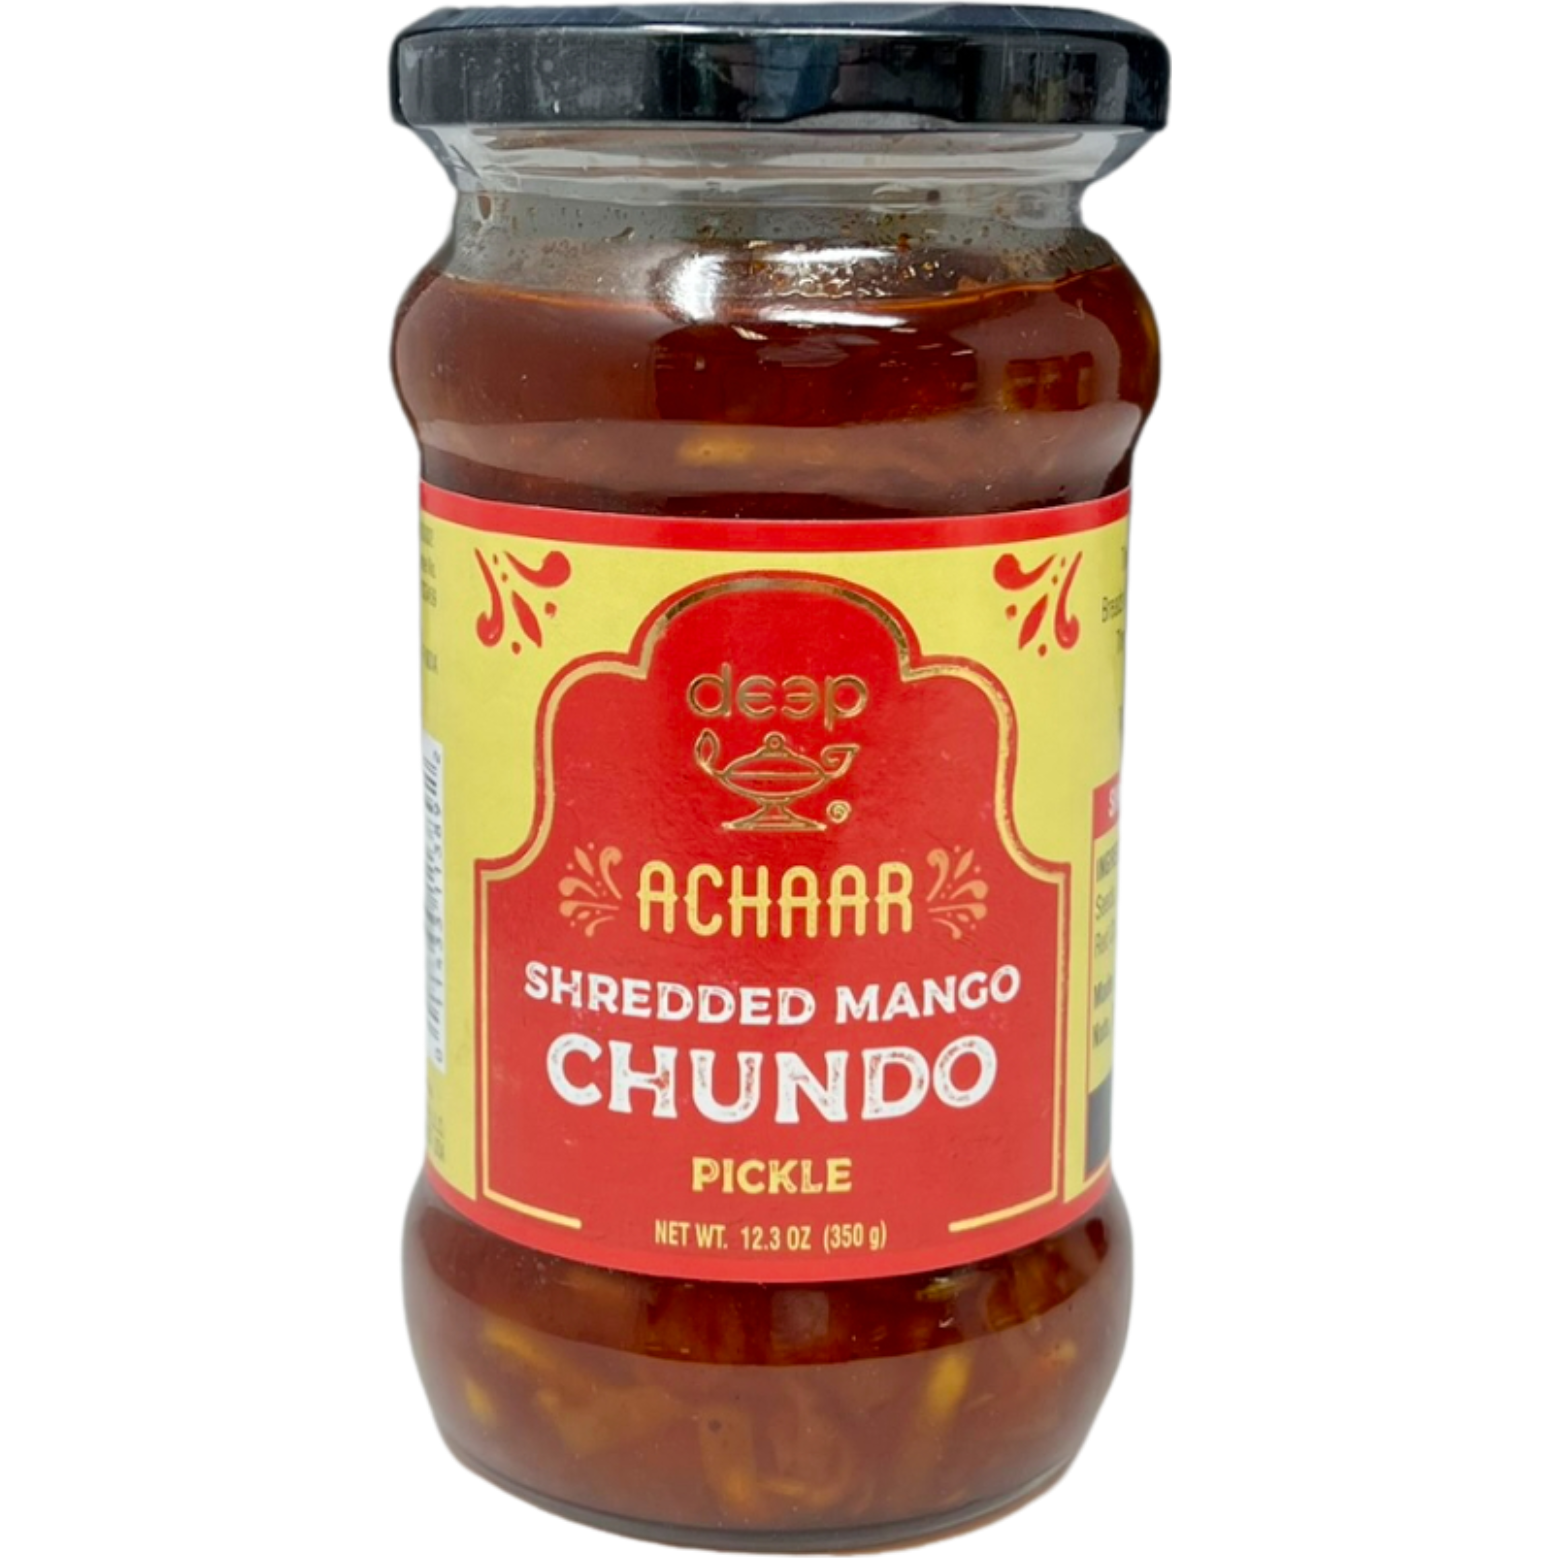 Pack of 5 - Deep Shredded Mango Chundo Pickle - 350 Gm (12.3 Oz)